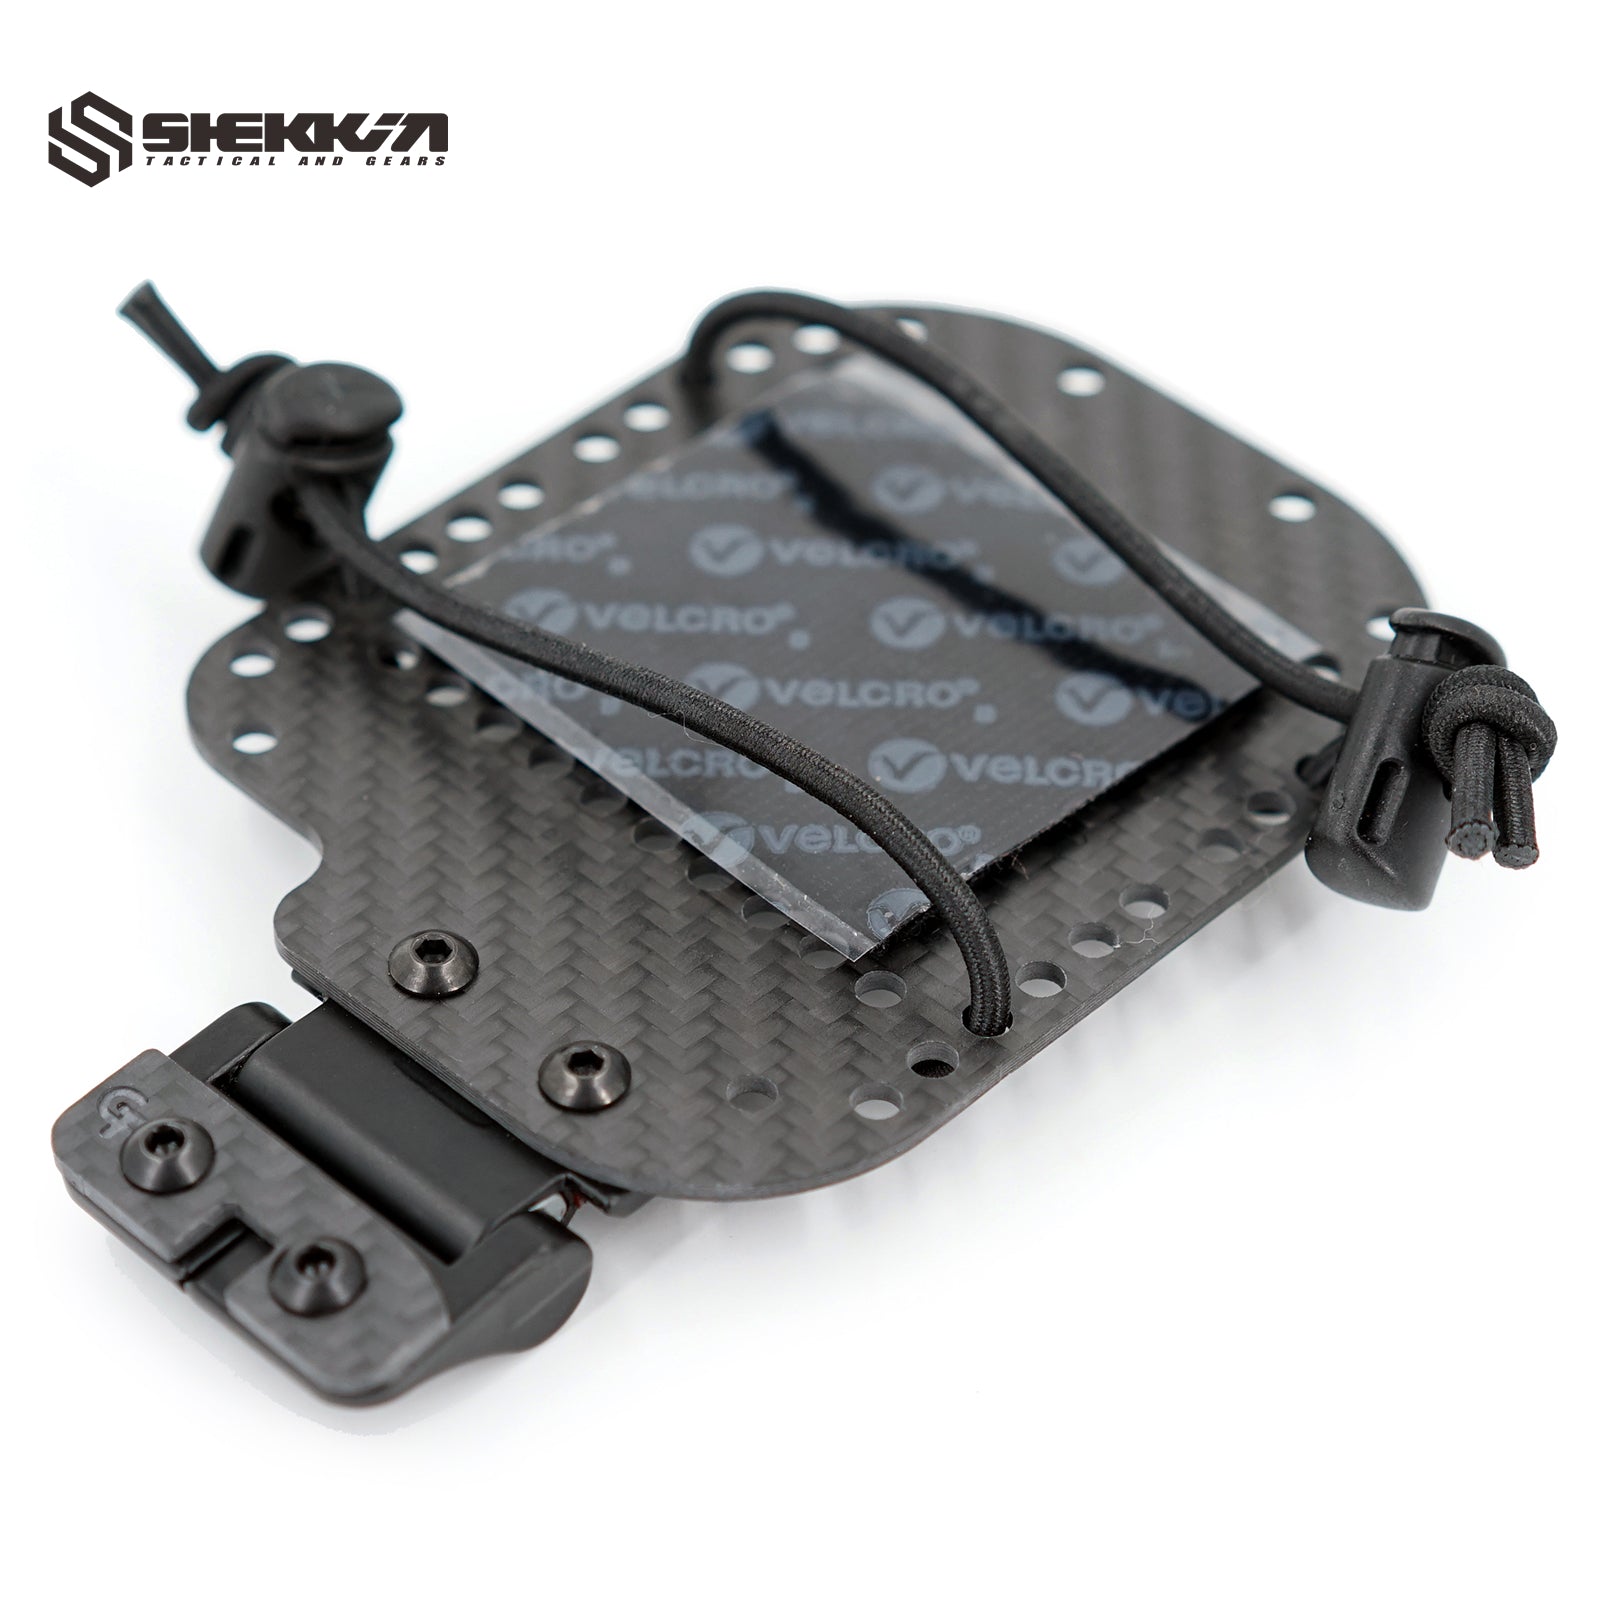 Carbon Fiber Navigation Flip board 20% off - Shekkin Gears